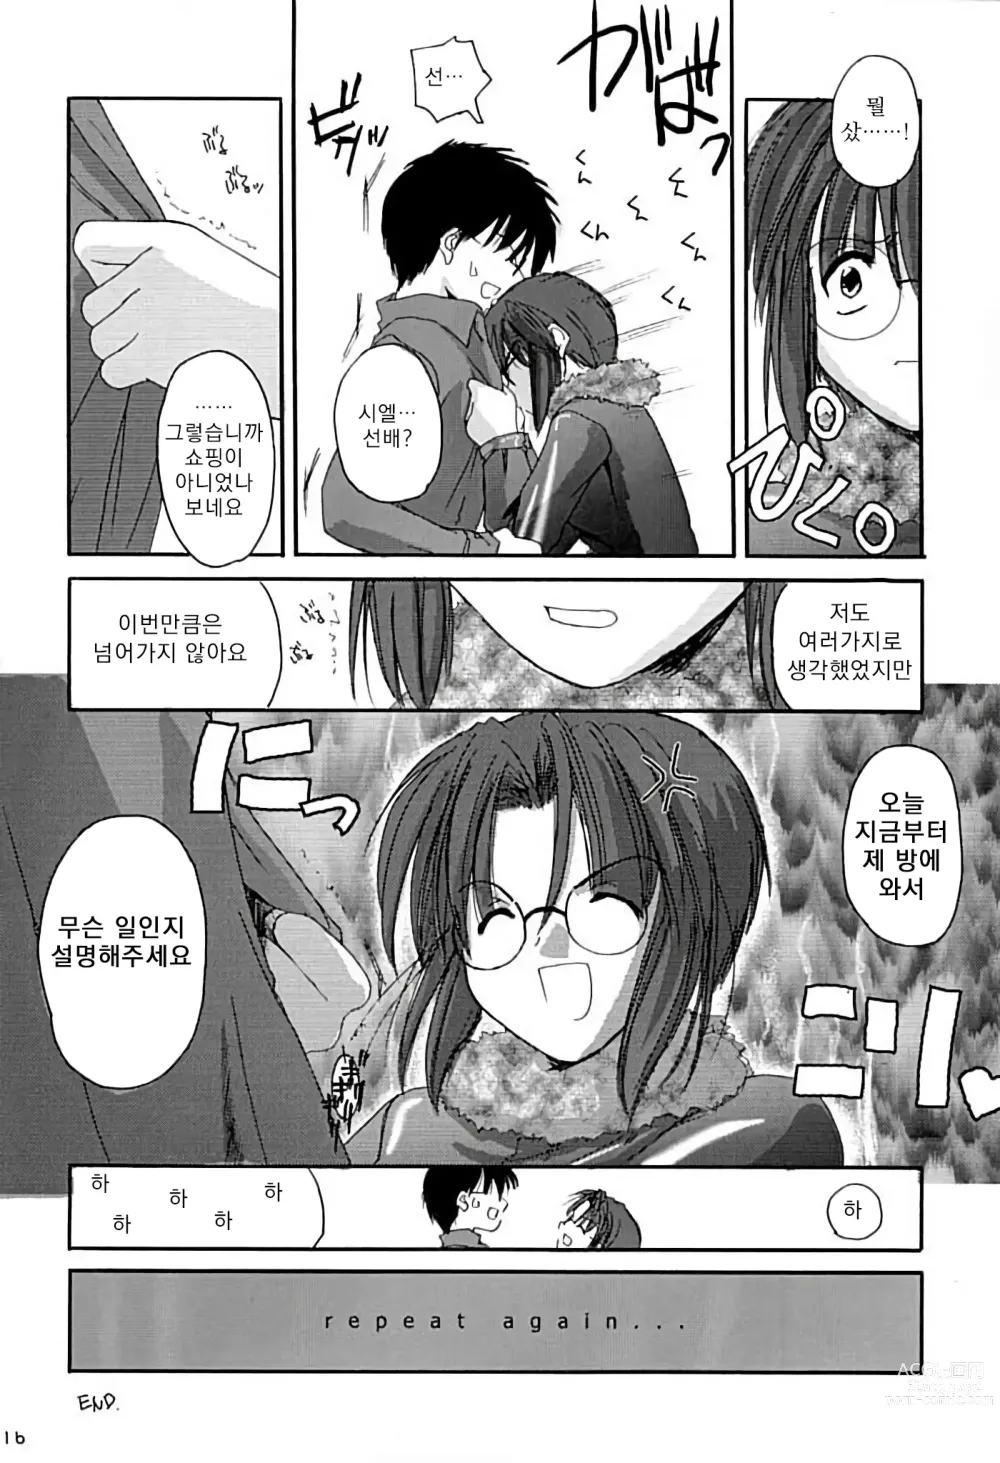 Page 15 of doujinshi 맹월 1.5